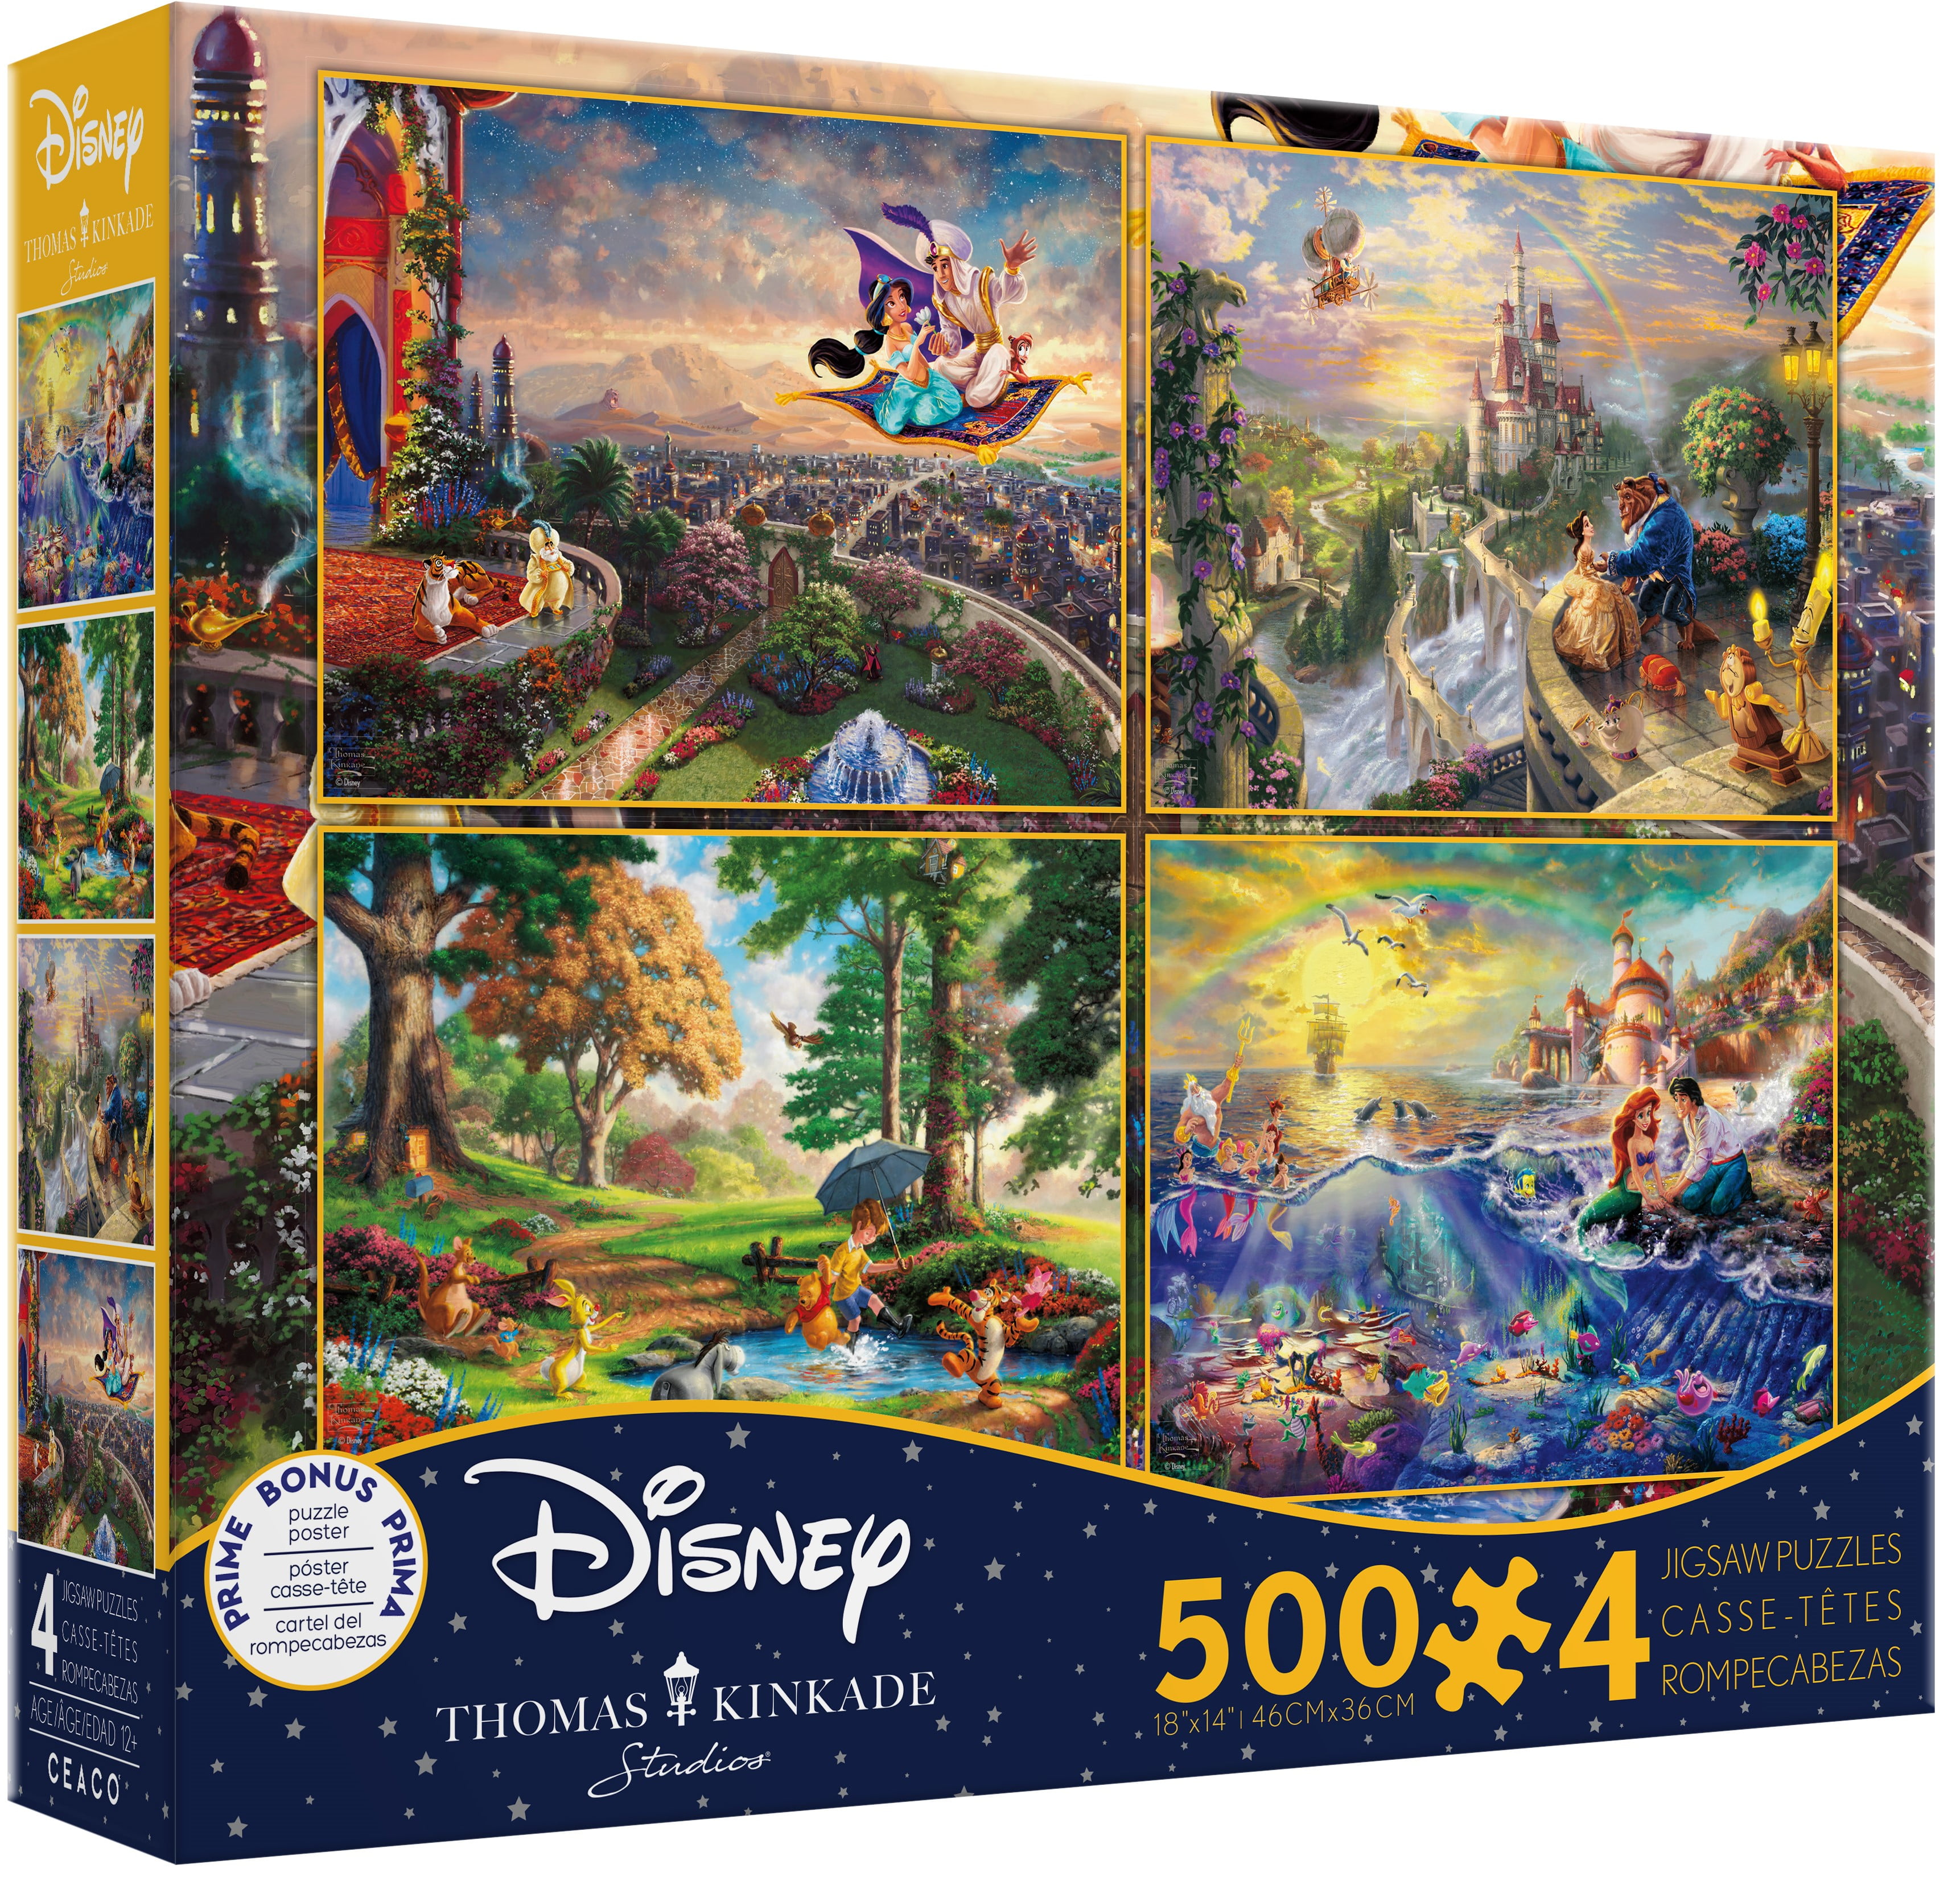 Jigsaw puzzles, Disney